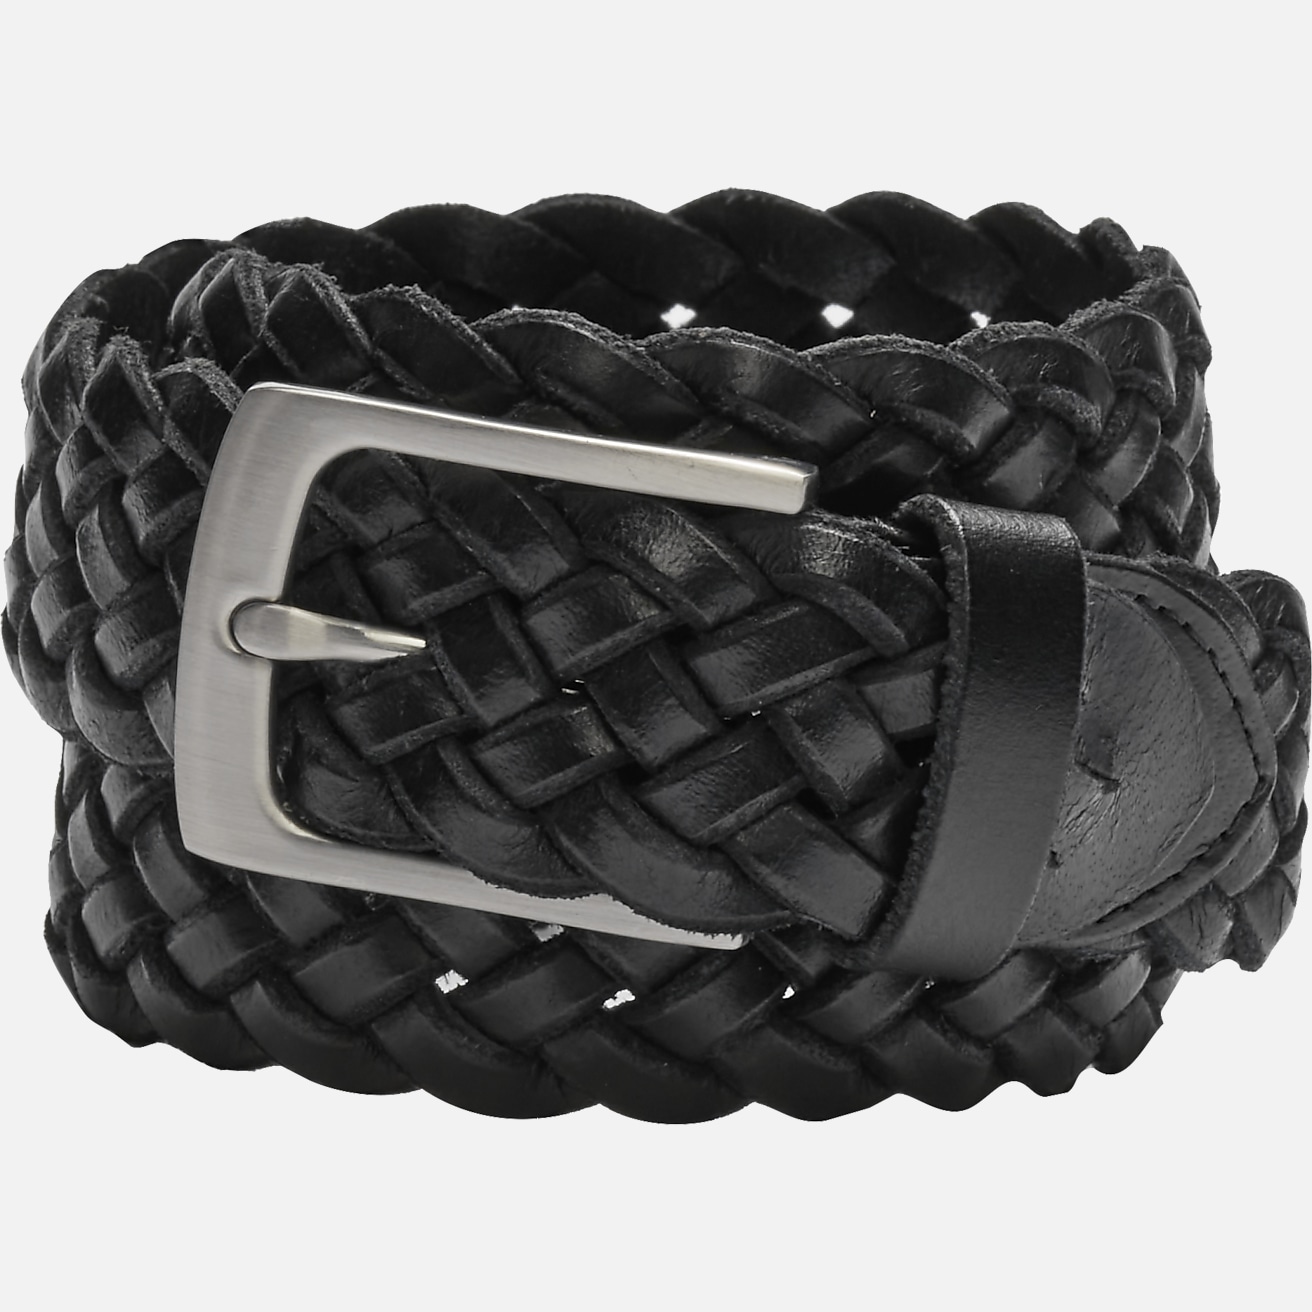 Masculine high-waist braided leather belt